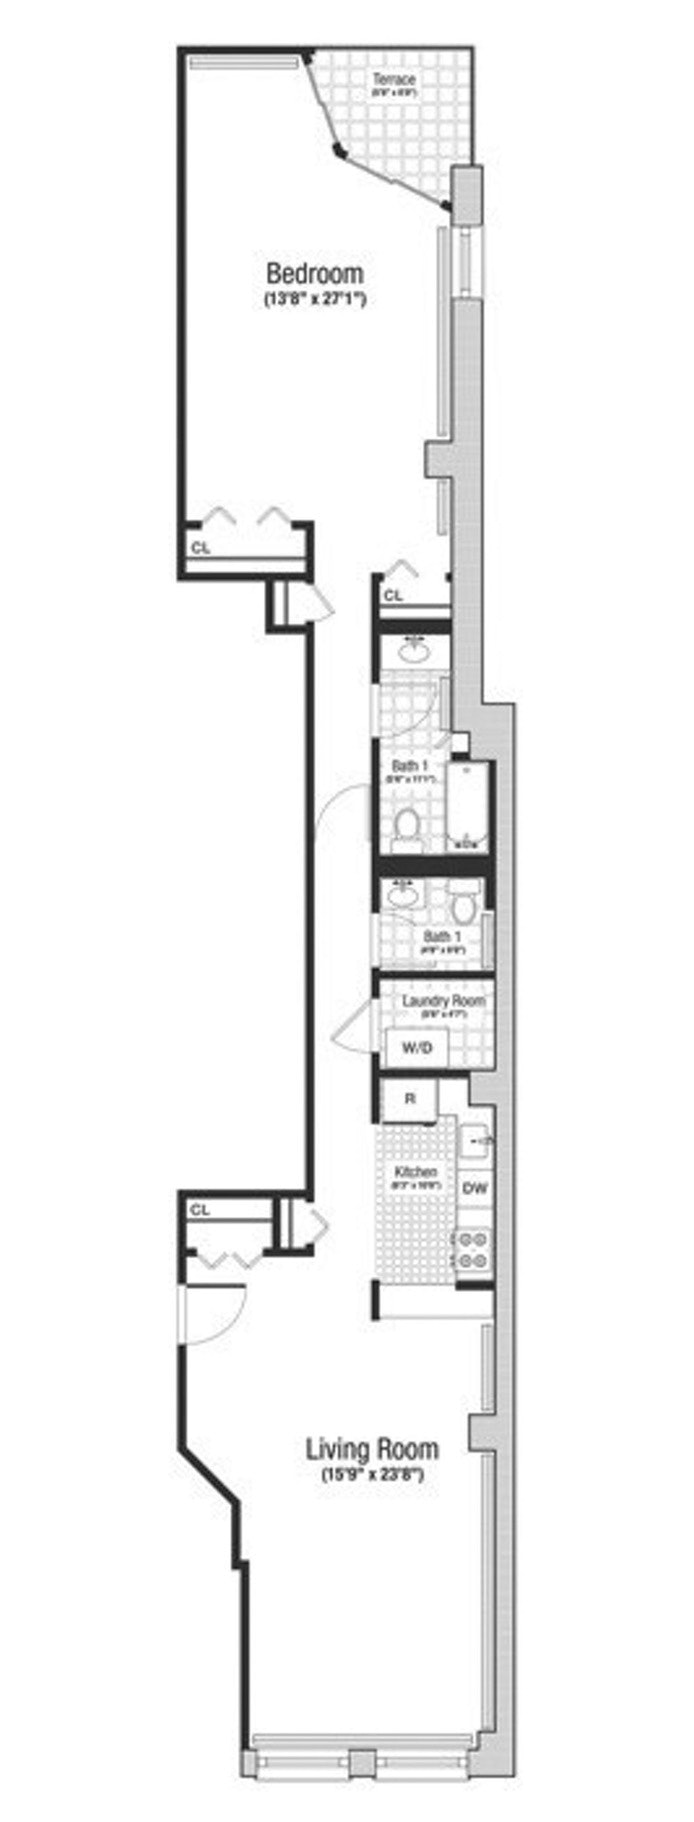 Floorplan for 36 Laight Street, 4A